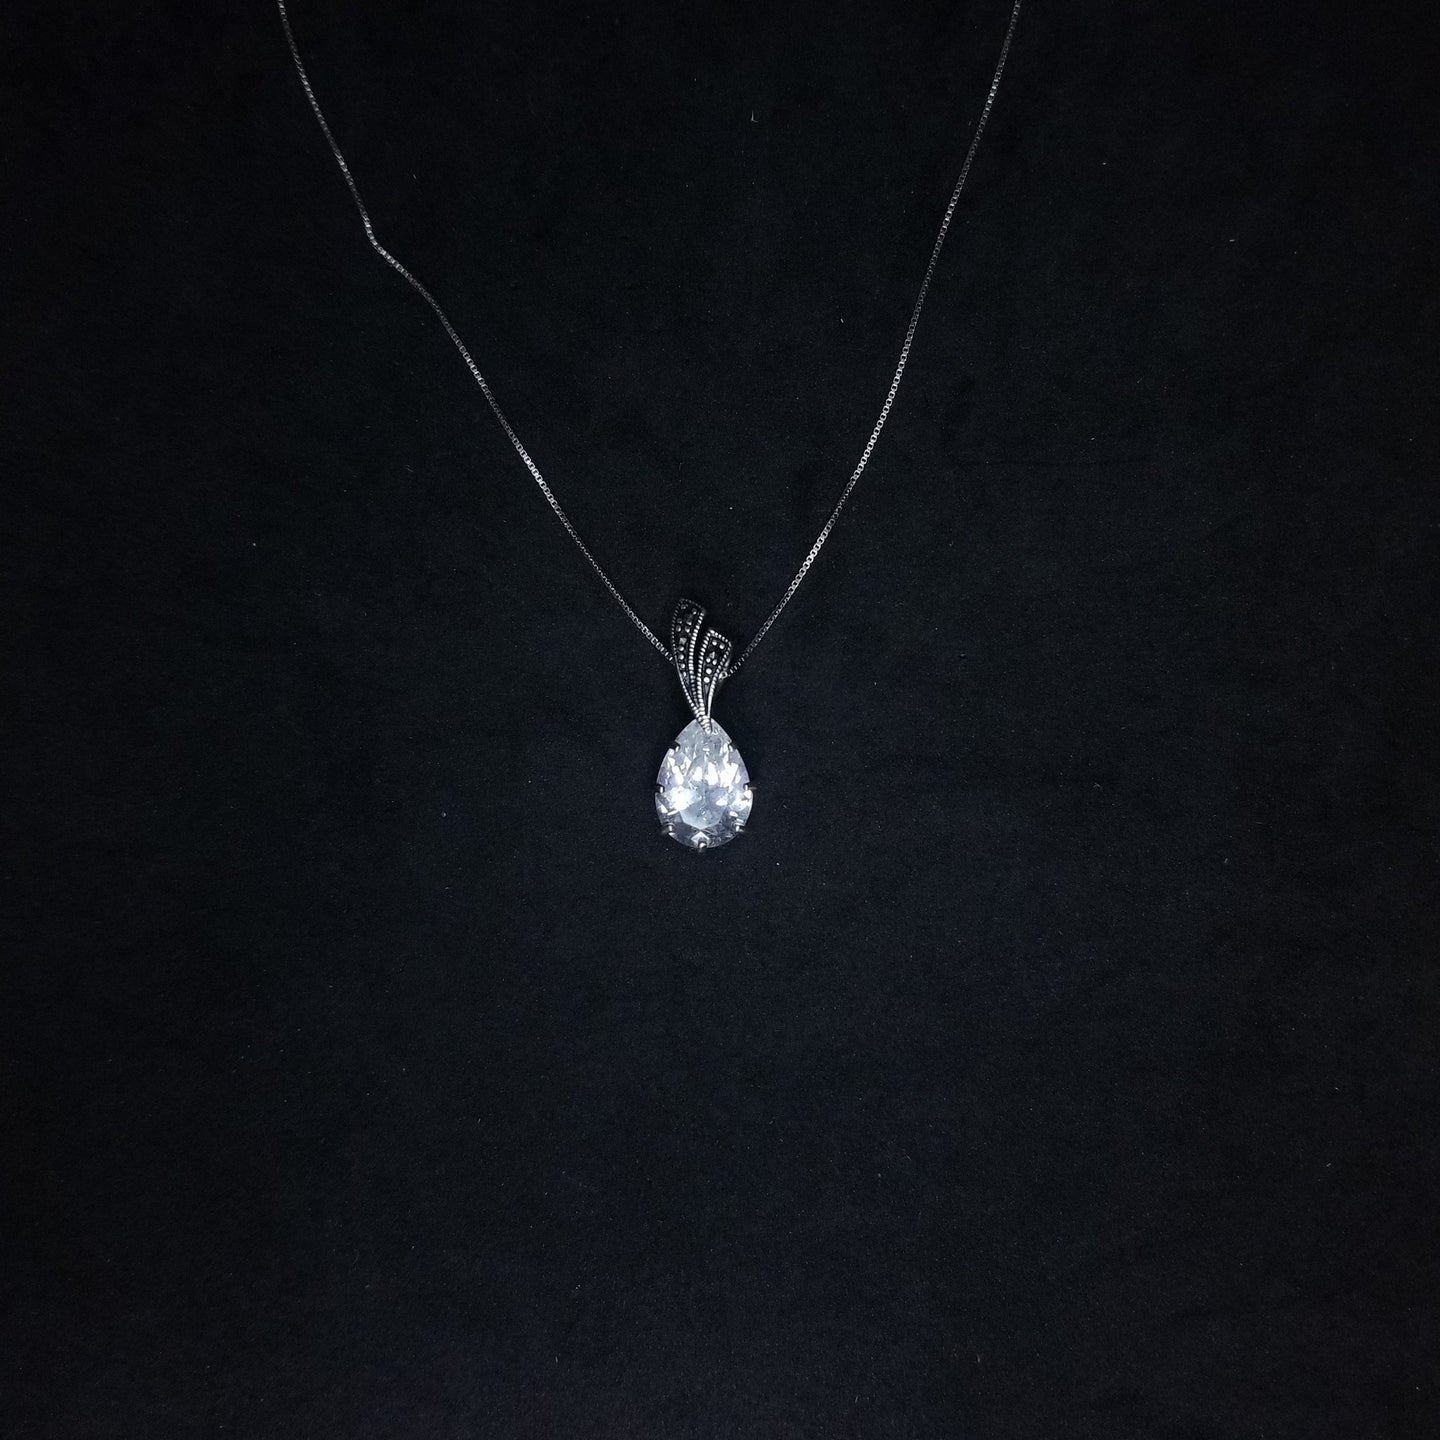 Teardrop CZ Black Onyx sterling silver pendant necklace